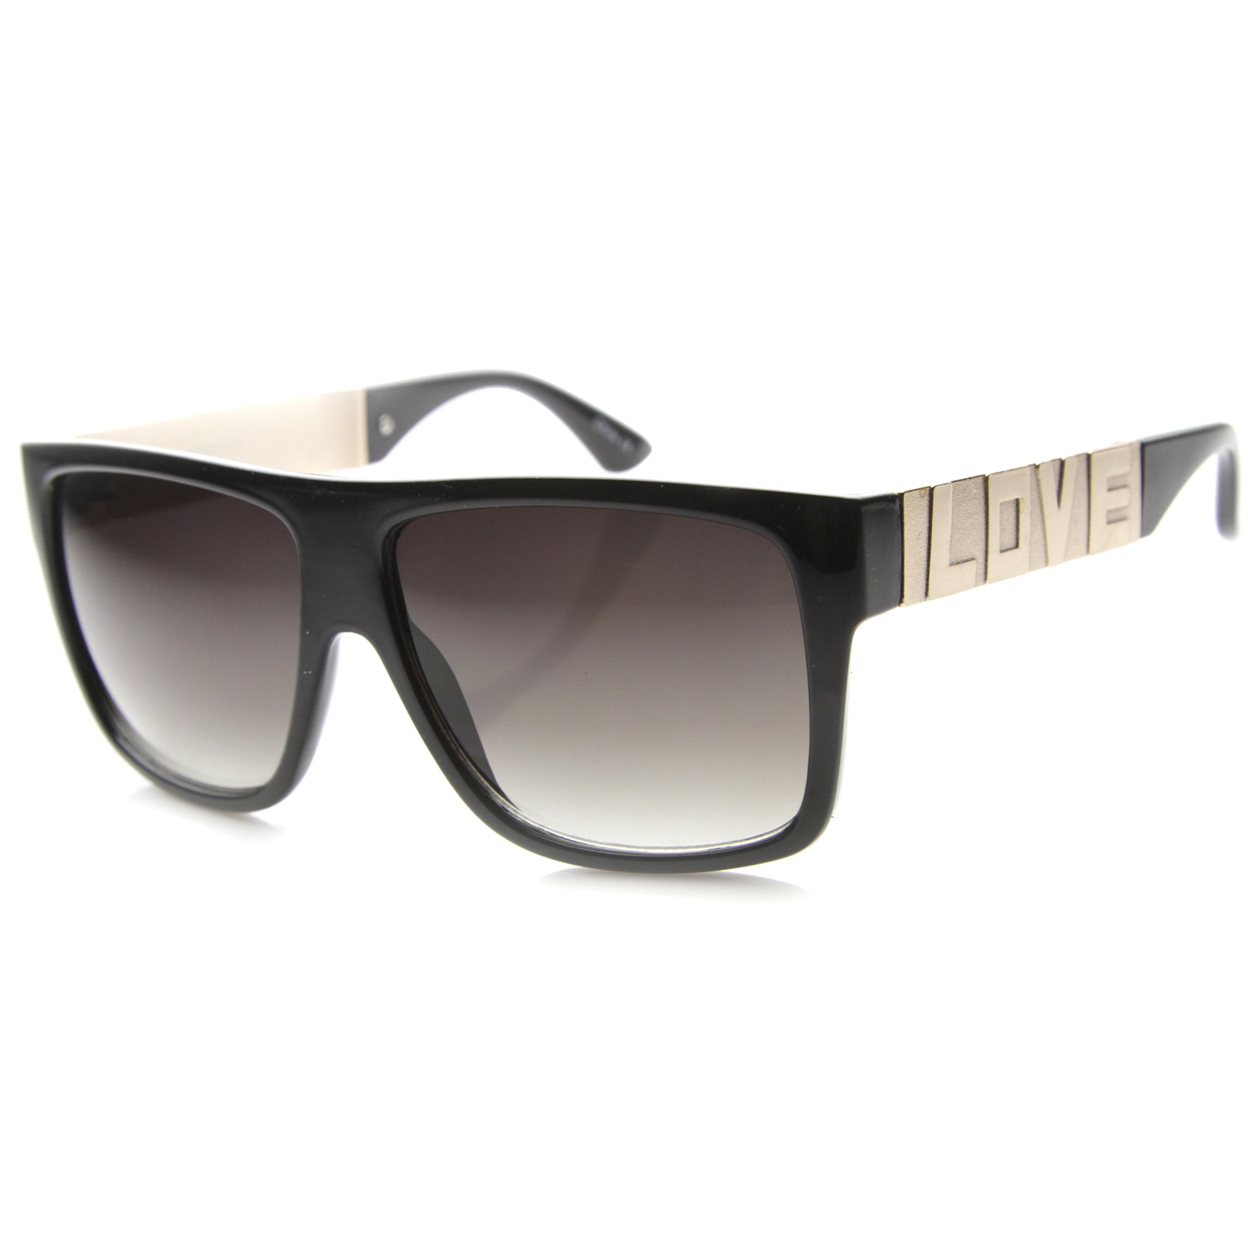 Unisex Square Sunglasses With UV400 Protected Gradient Lens 9850 - Black-Gold / Lavender